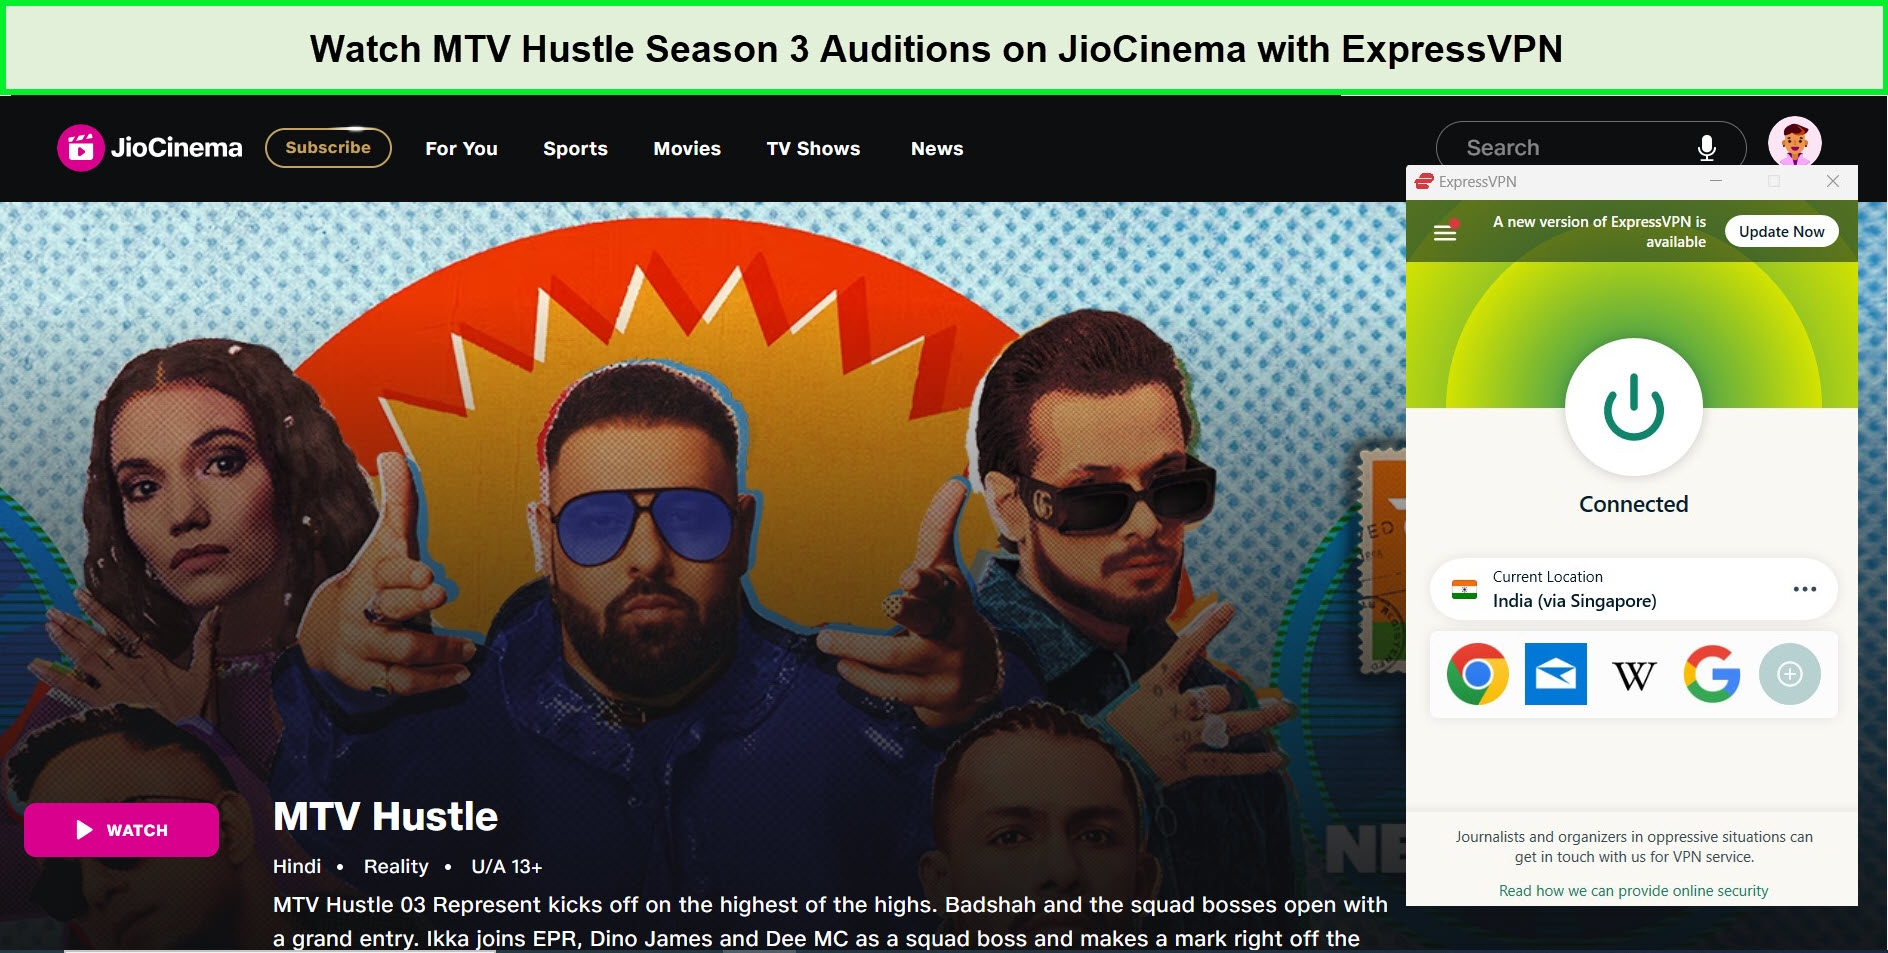 Watch-MTV-Hustle-Season-3-Auditions-Outside-India-on-JioCinema-with-ExpressVPN